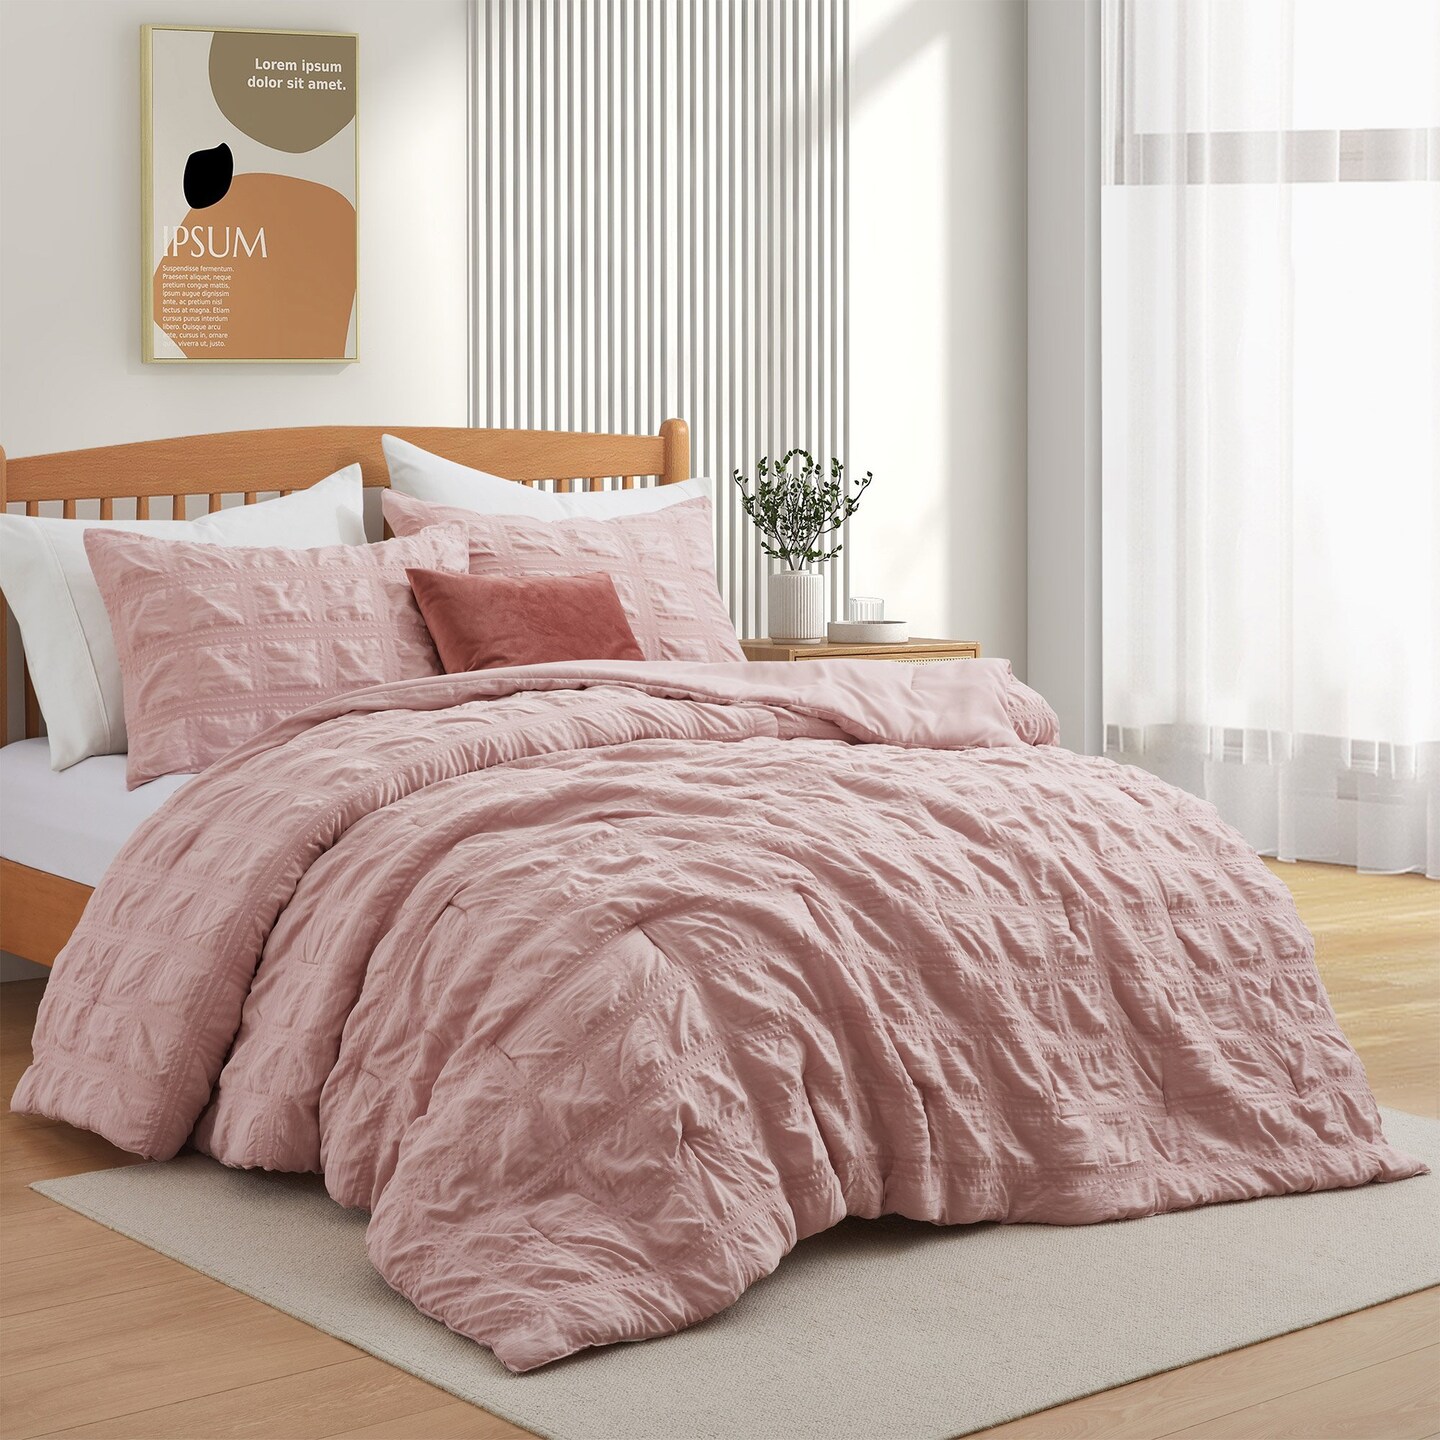 Peace Nest All Season Crinkle Textured Down Alternative Comforter Set-Seersucker Bedding Set